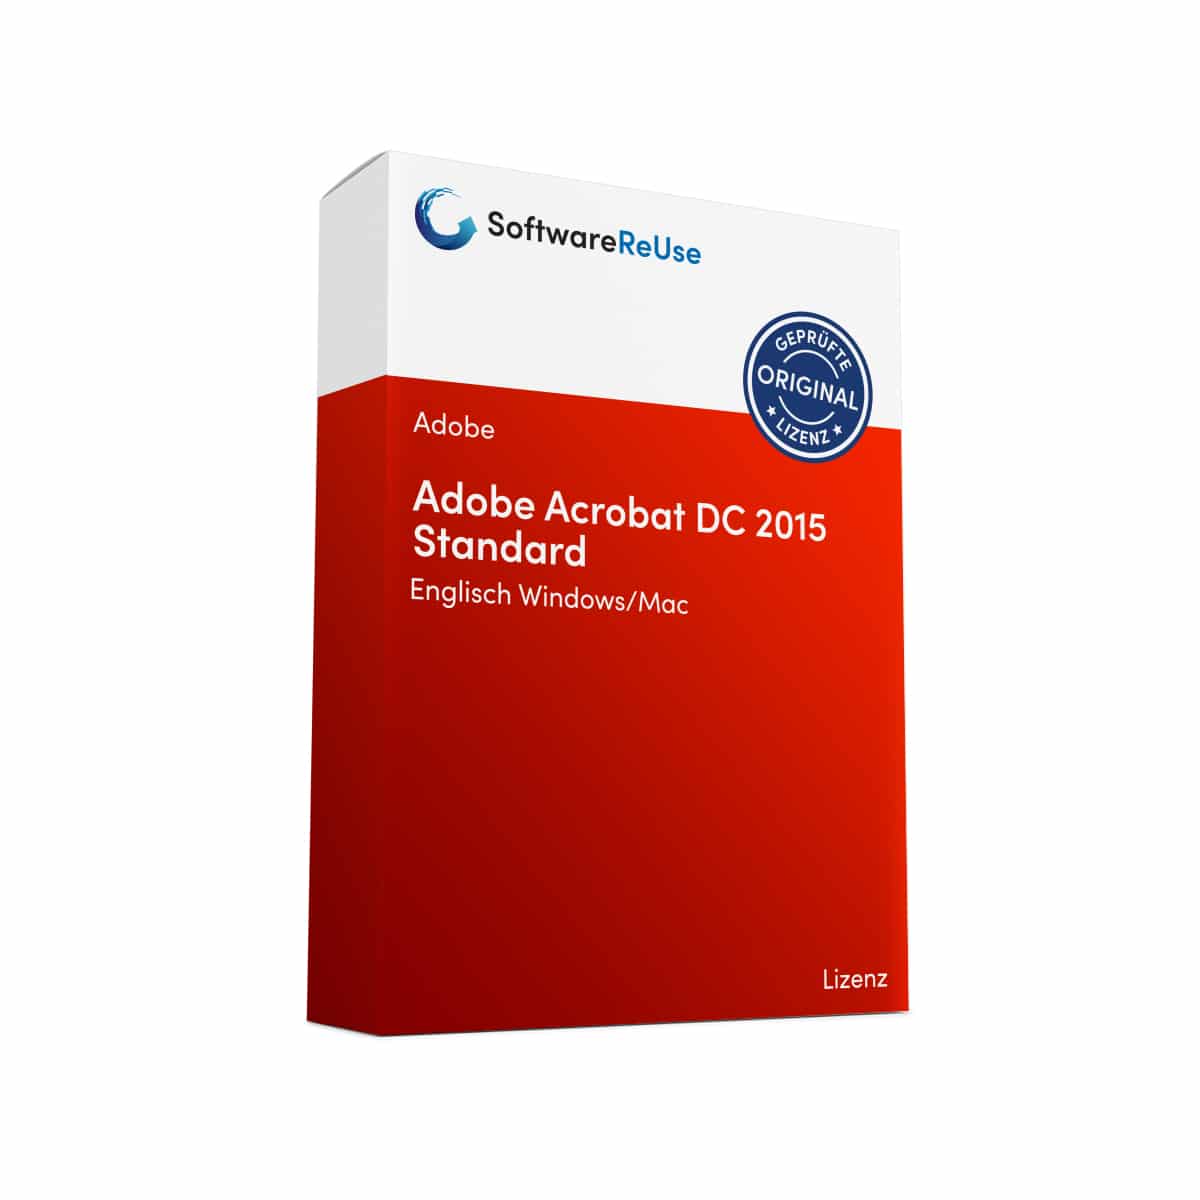 Adobe Acrobat DC 2015 Standard